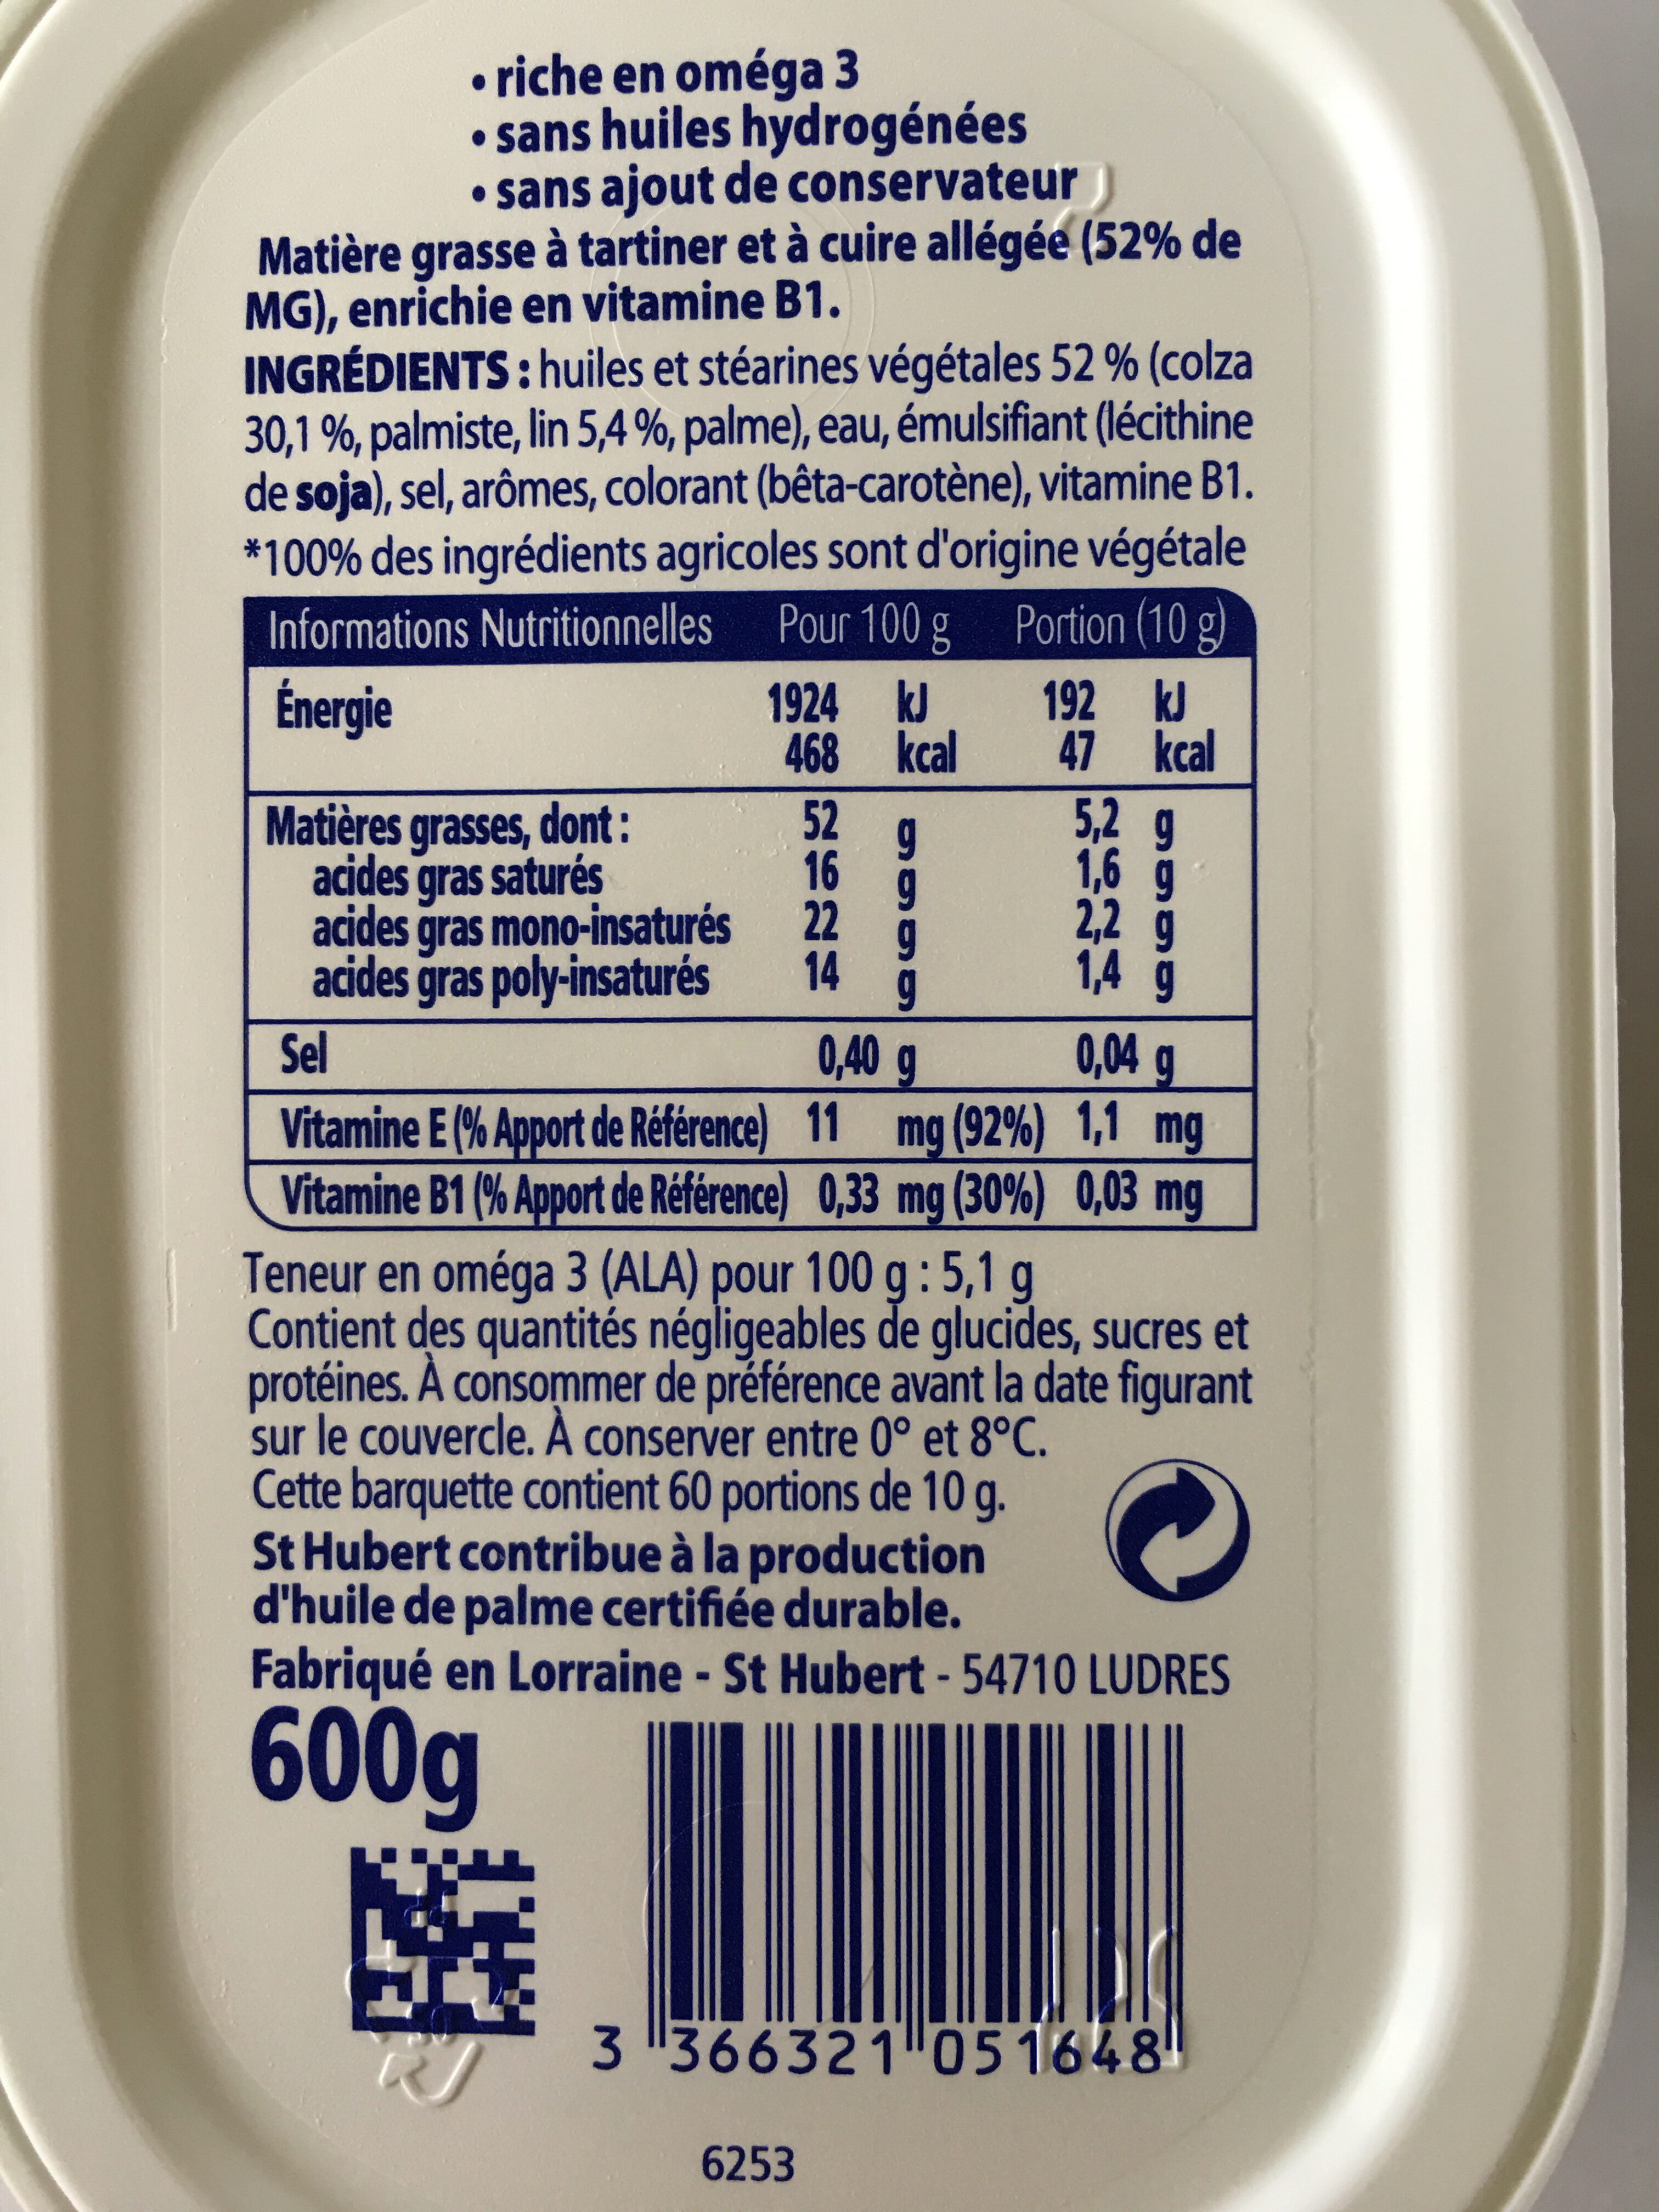 St hubert omega 3 600 g doux format special - Ingredientes - fr